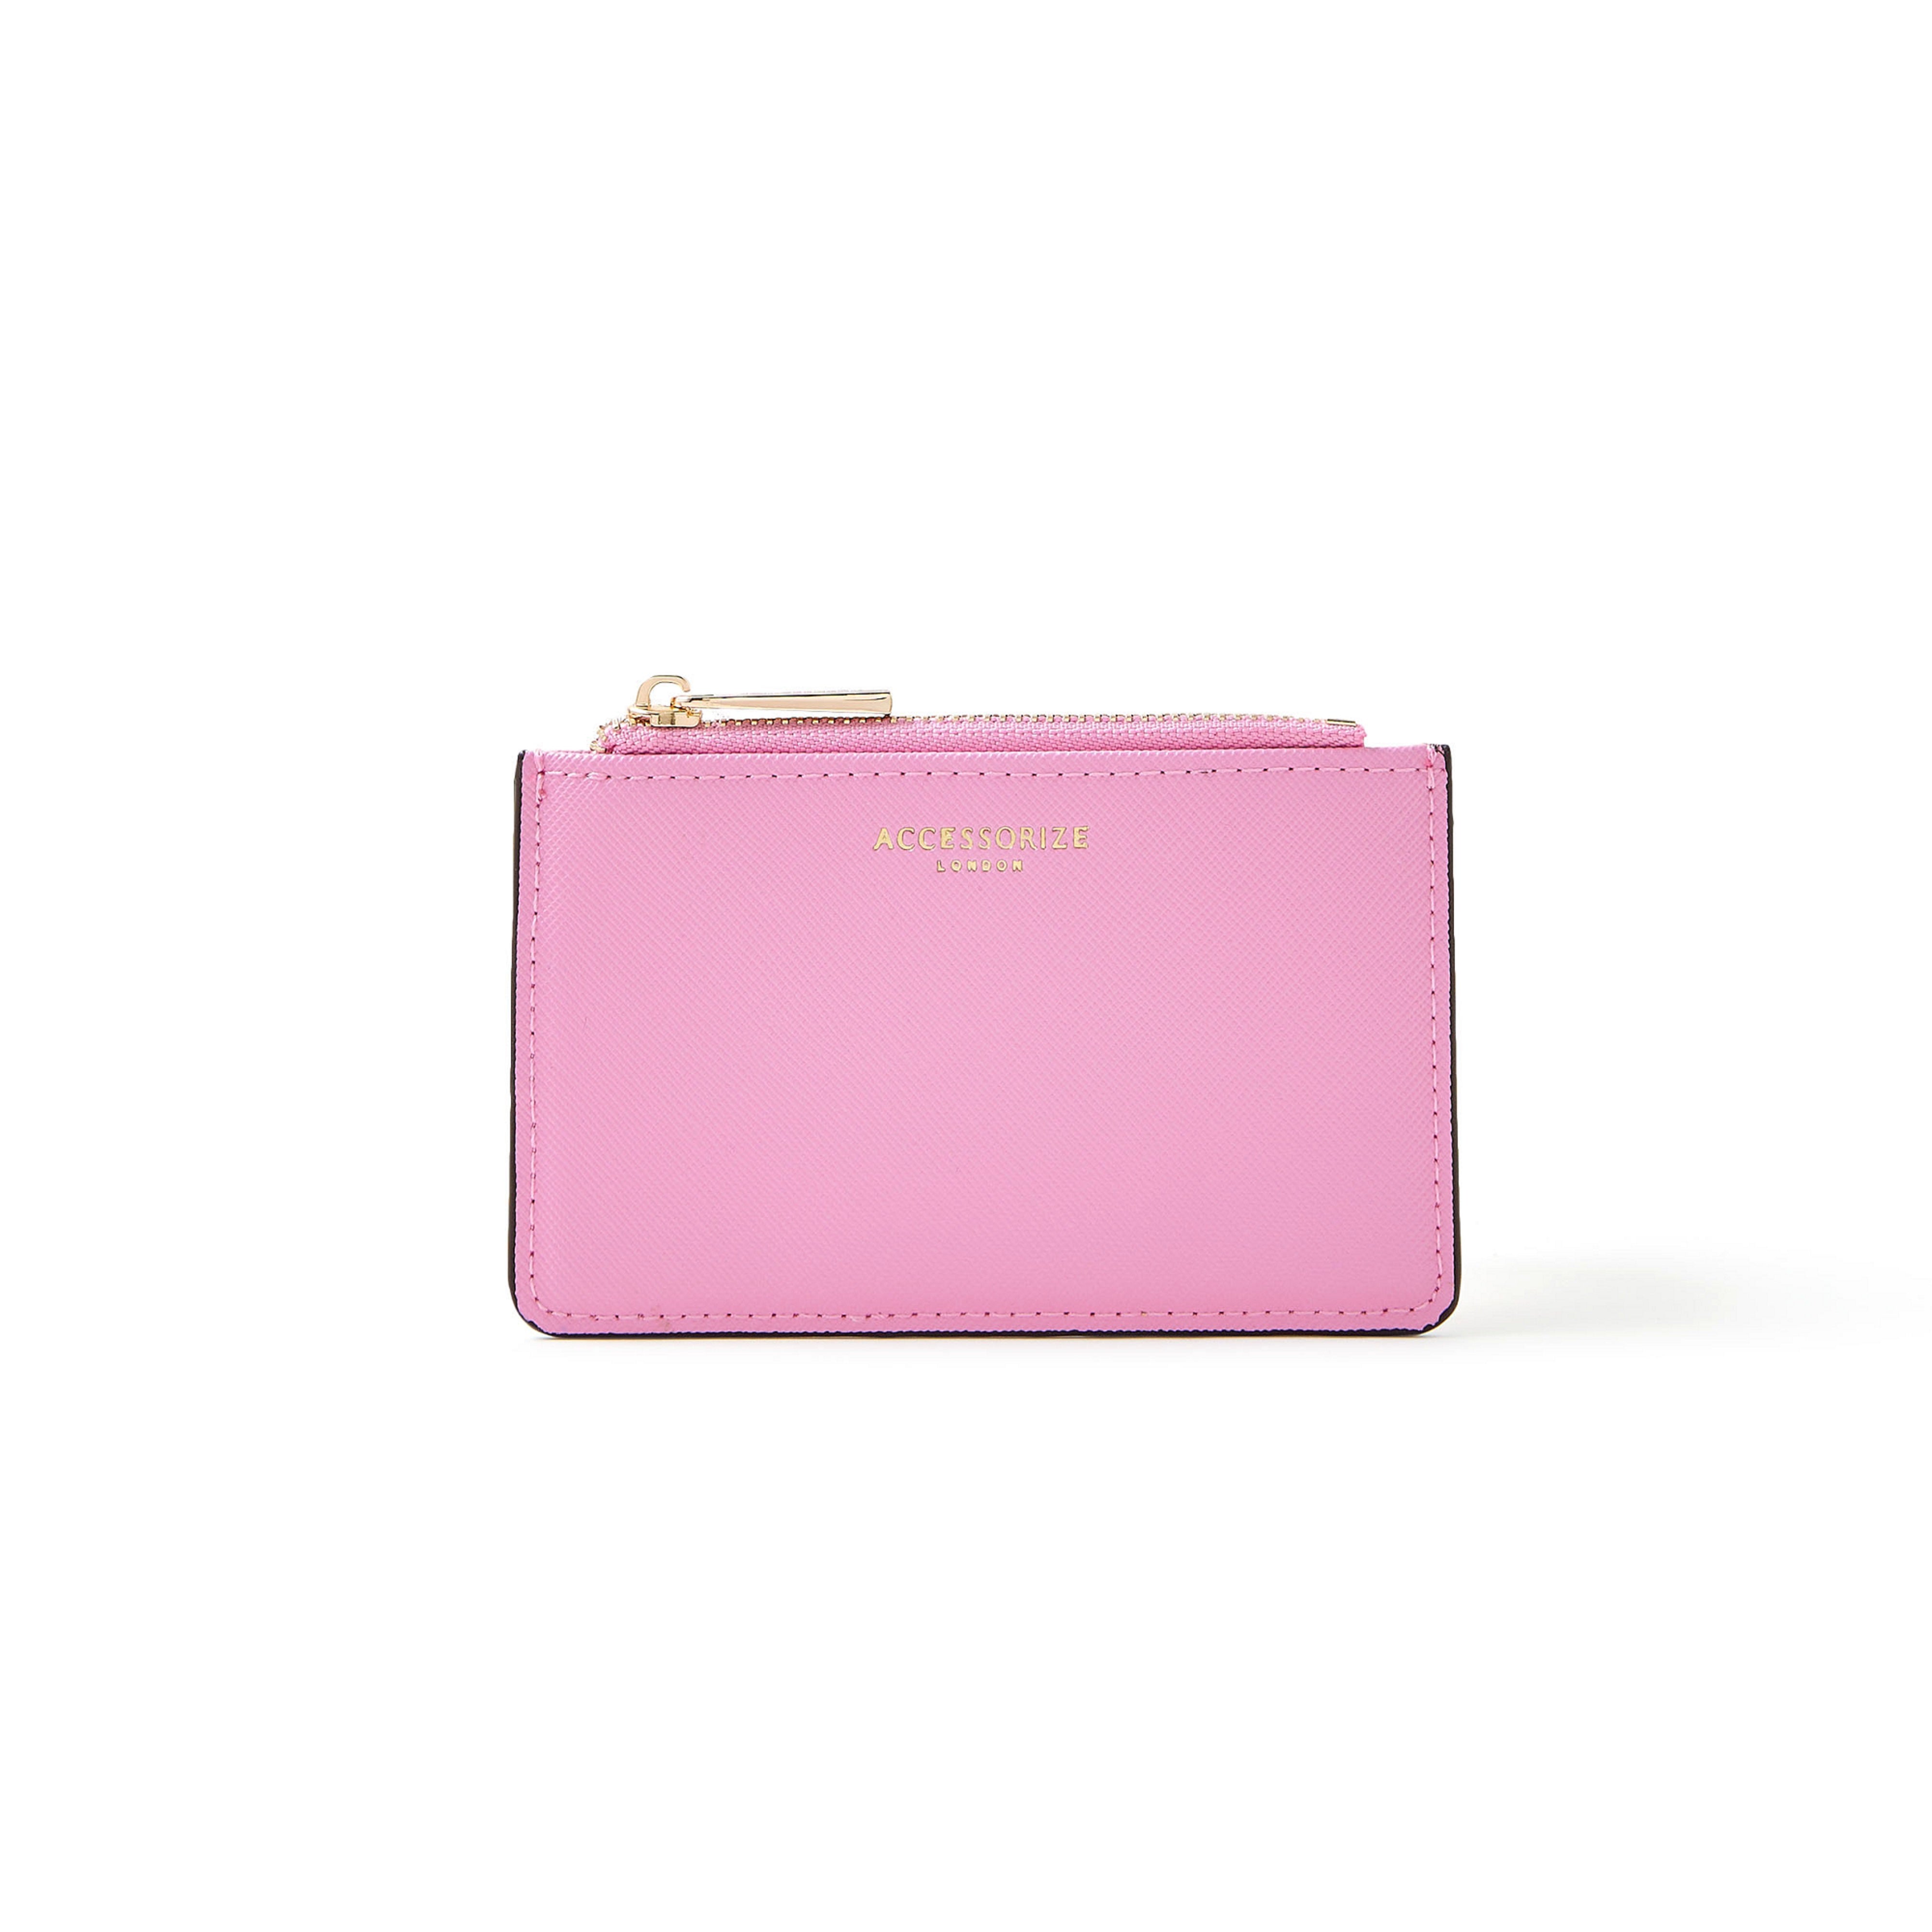 Accessorize London Women's Faux Leather Pink Casey Cardholder wallet